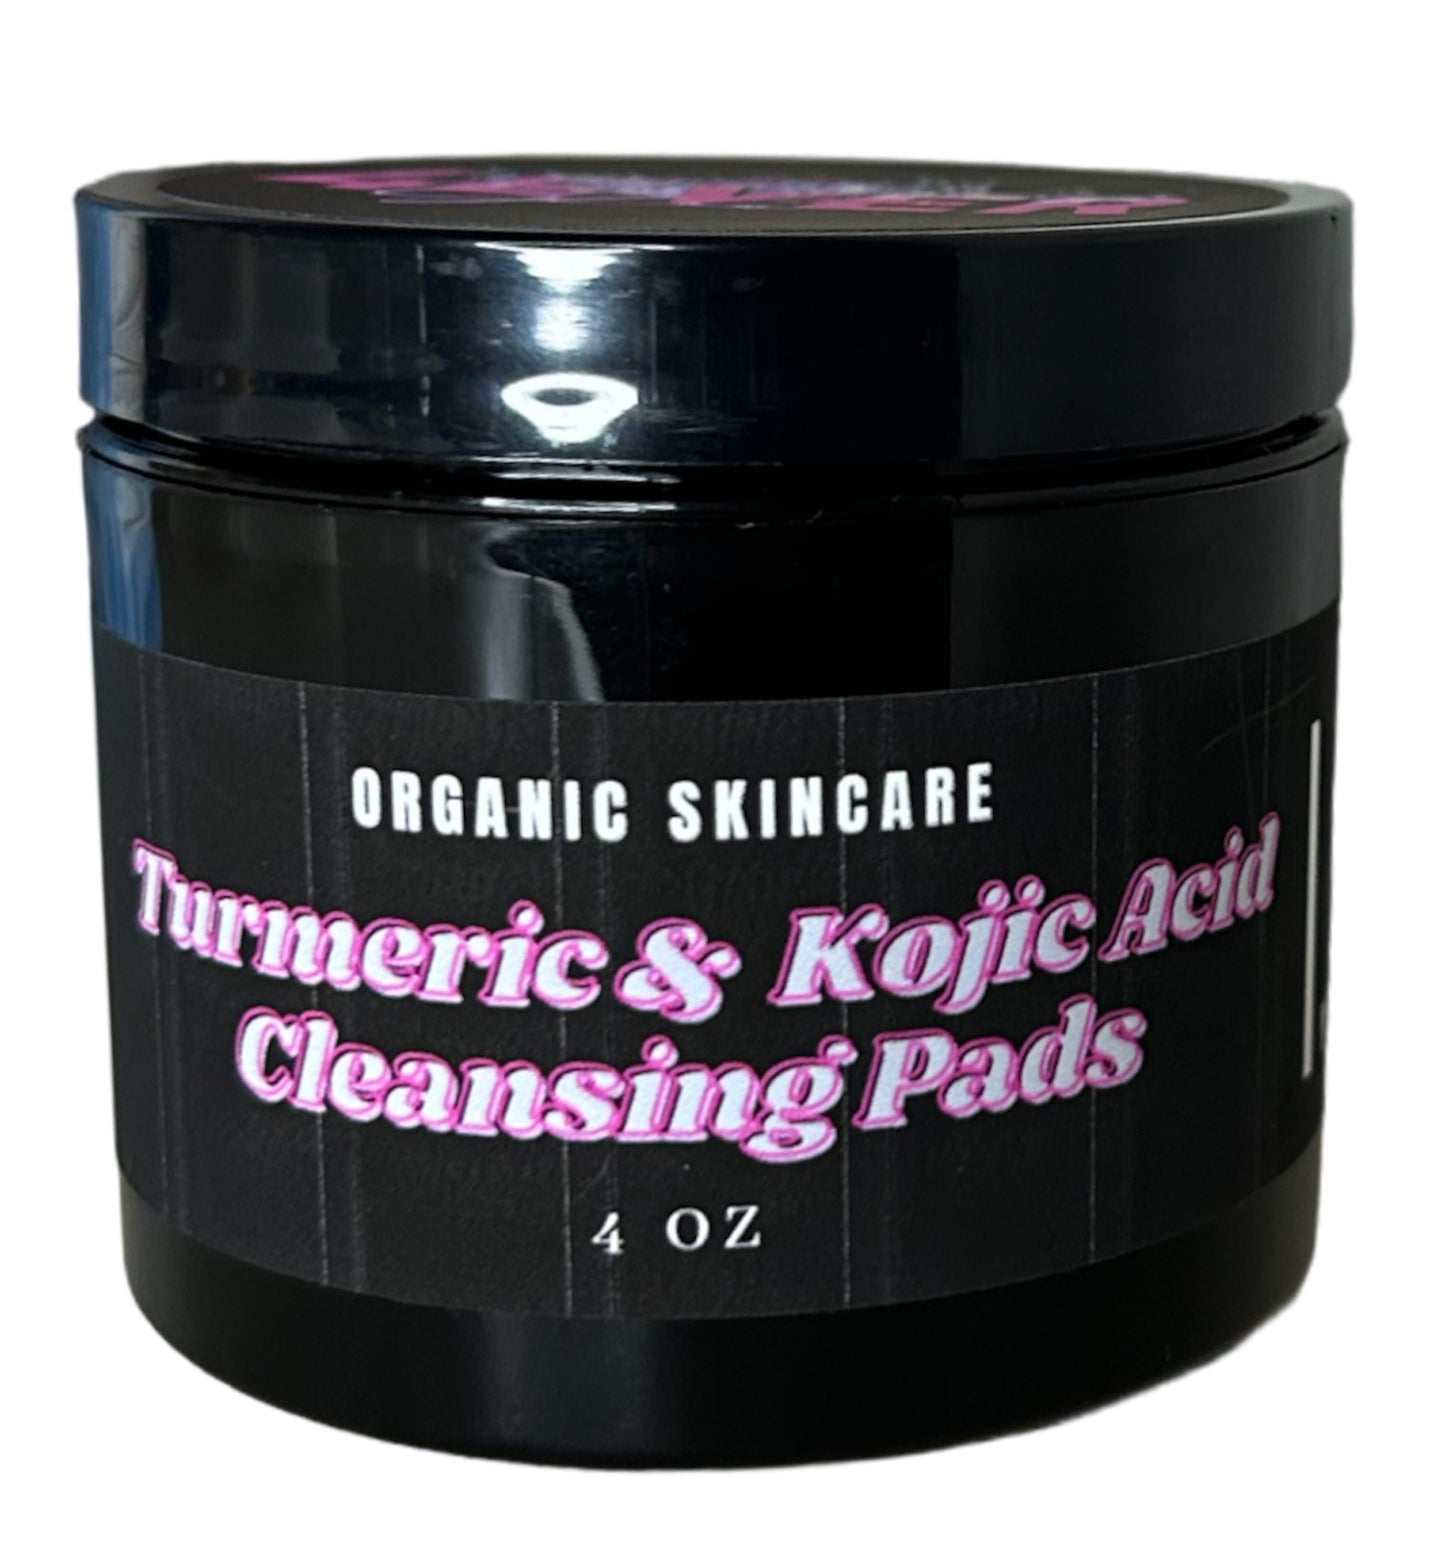 Turmeric & Kojic Acid Cleansing Pads